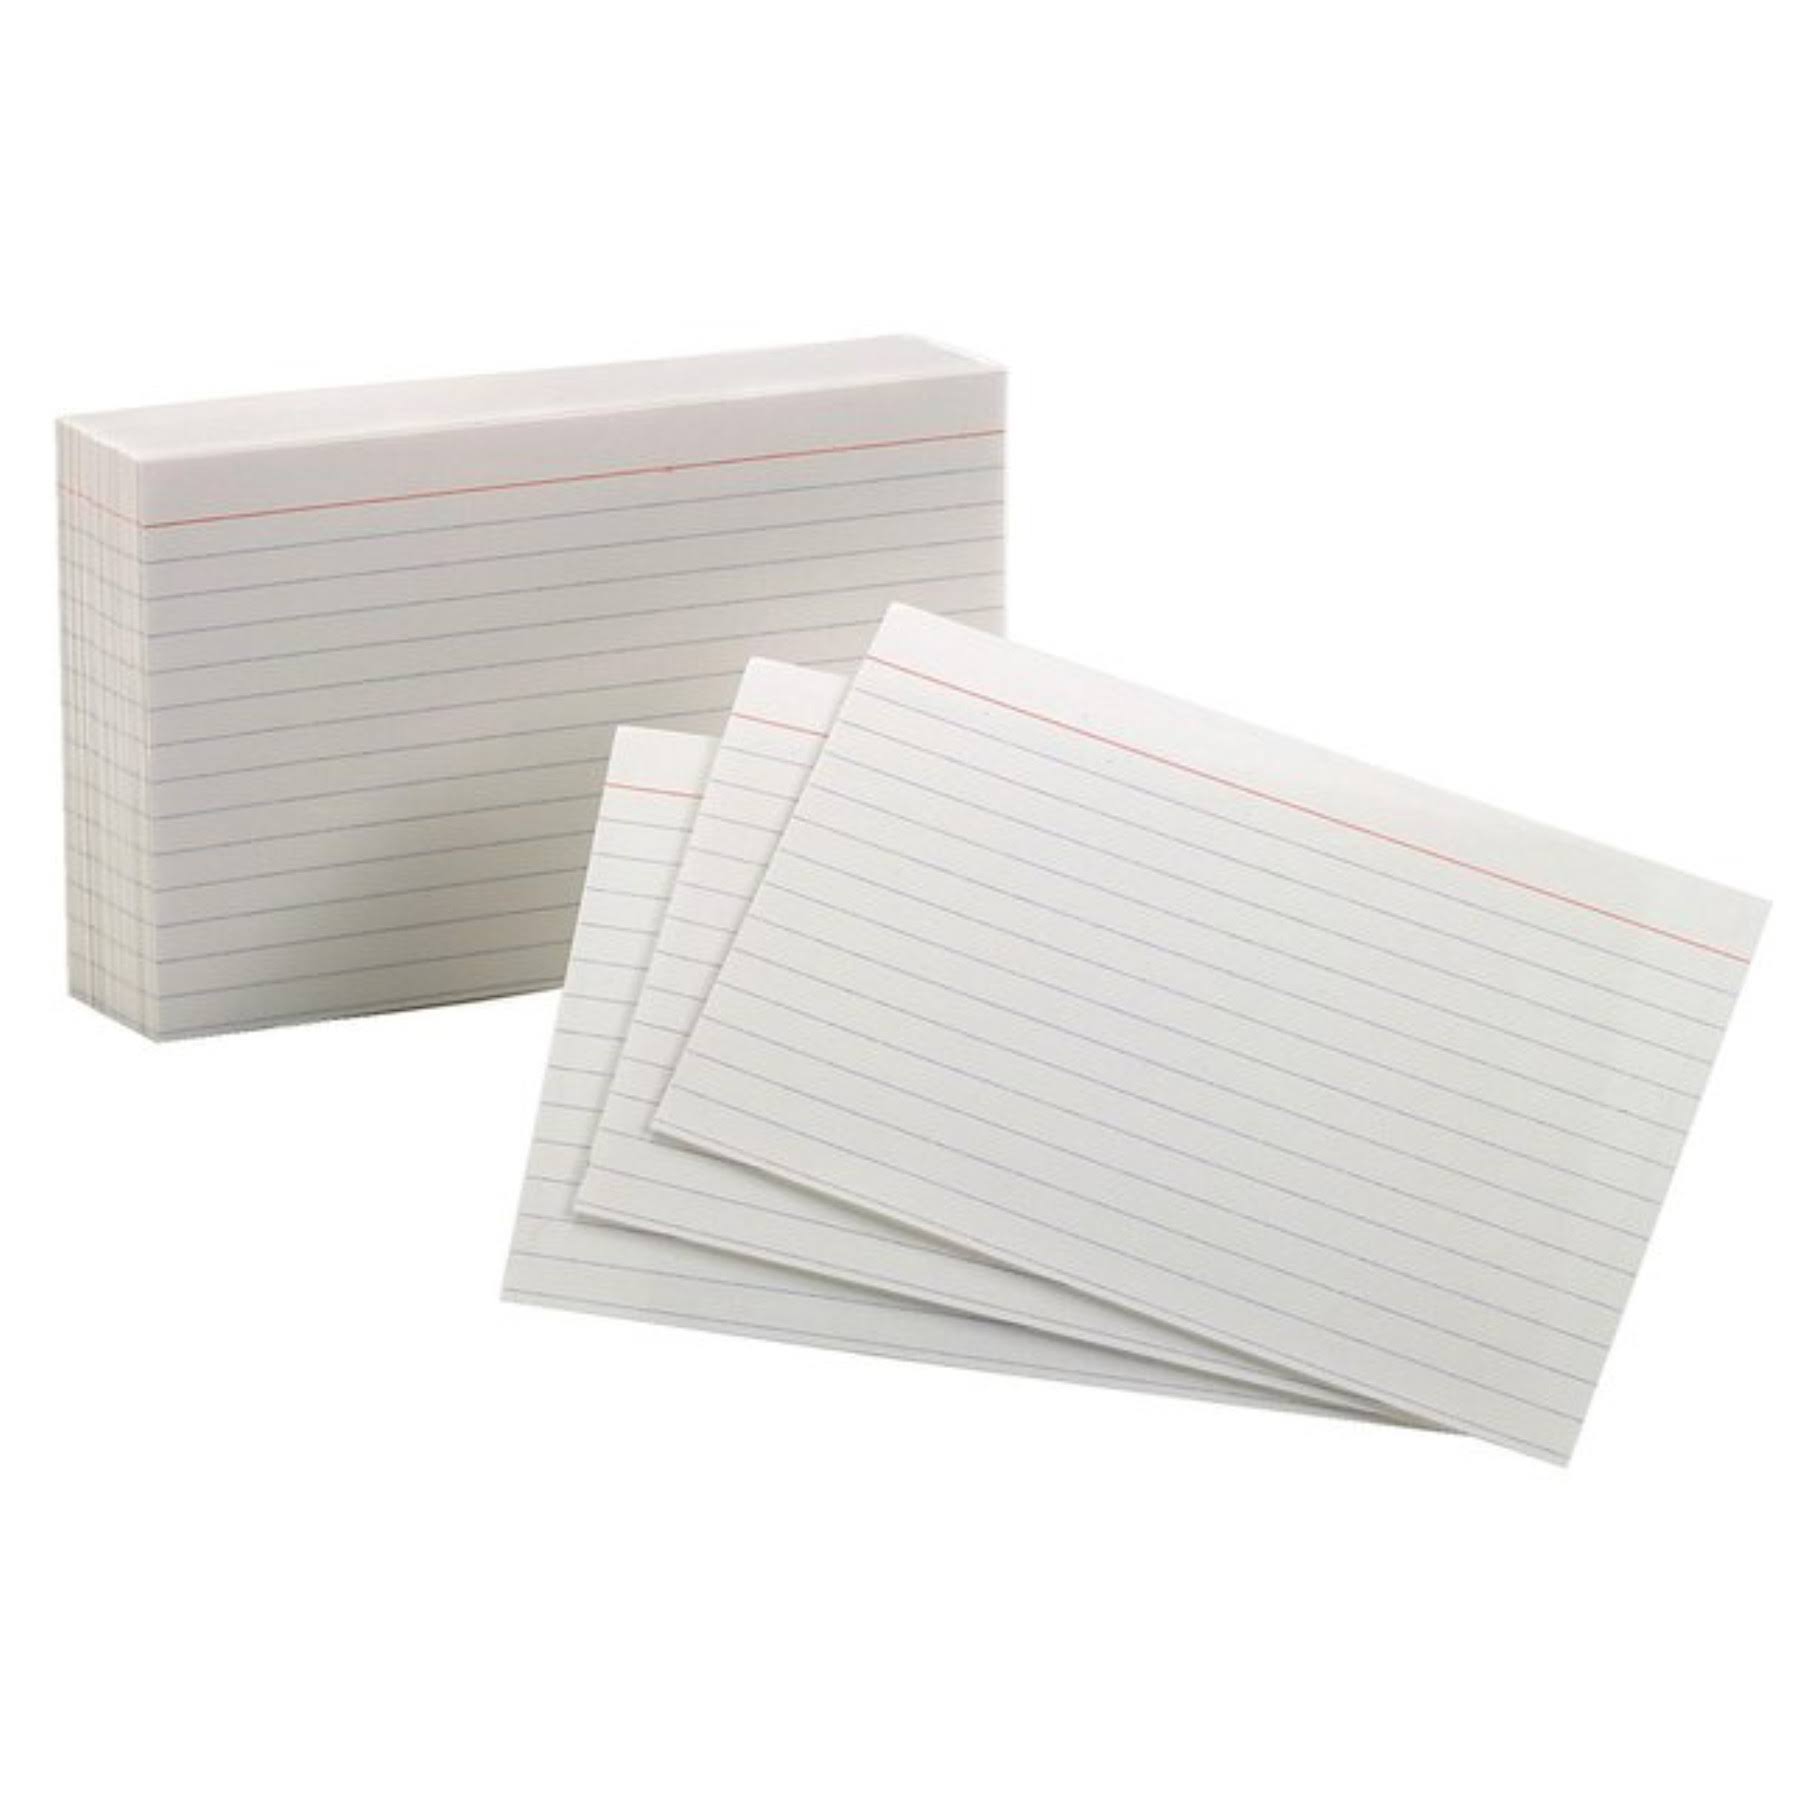 Esselte Pendaflex Index Cards - White, Ruled, 3"x5", x100